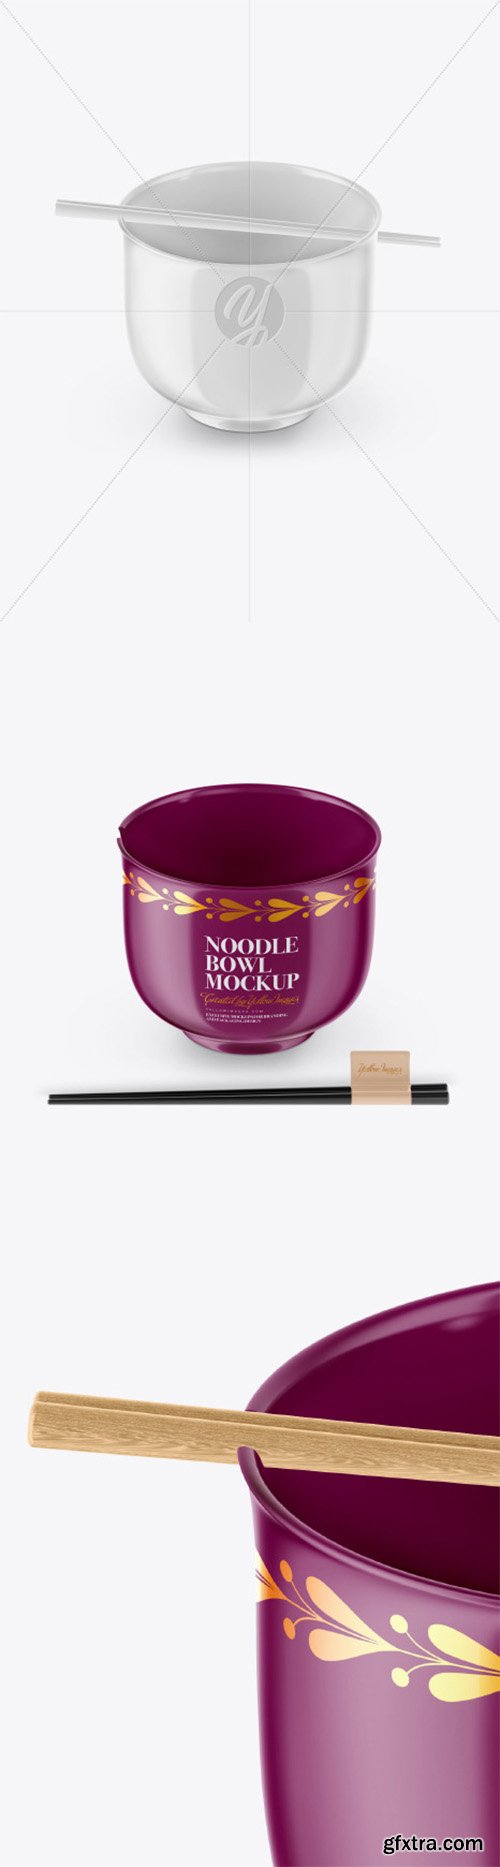 Glossy Noodle Bowl Mockup 52035